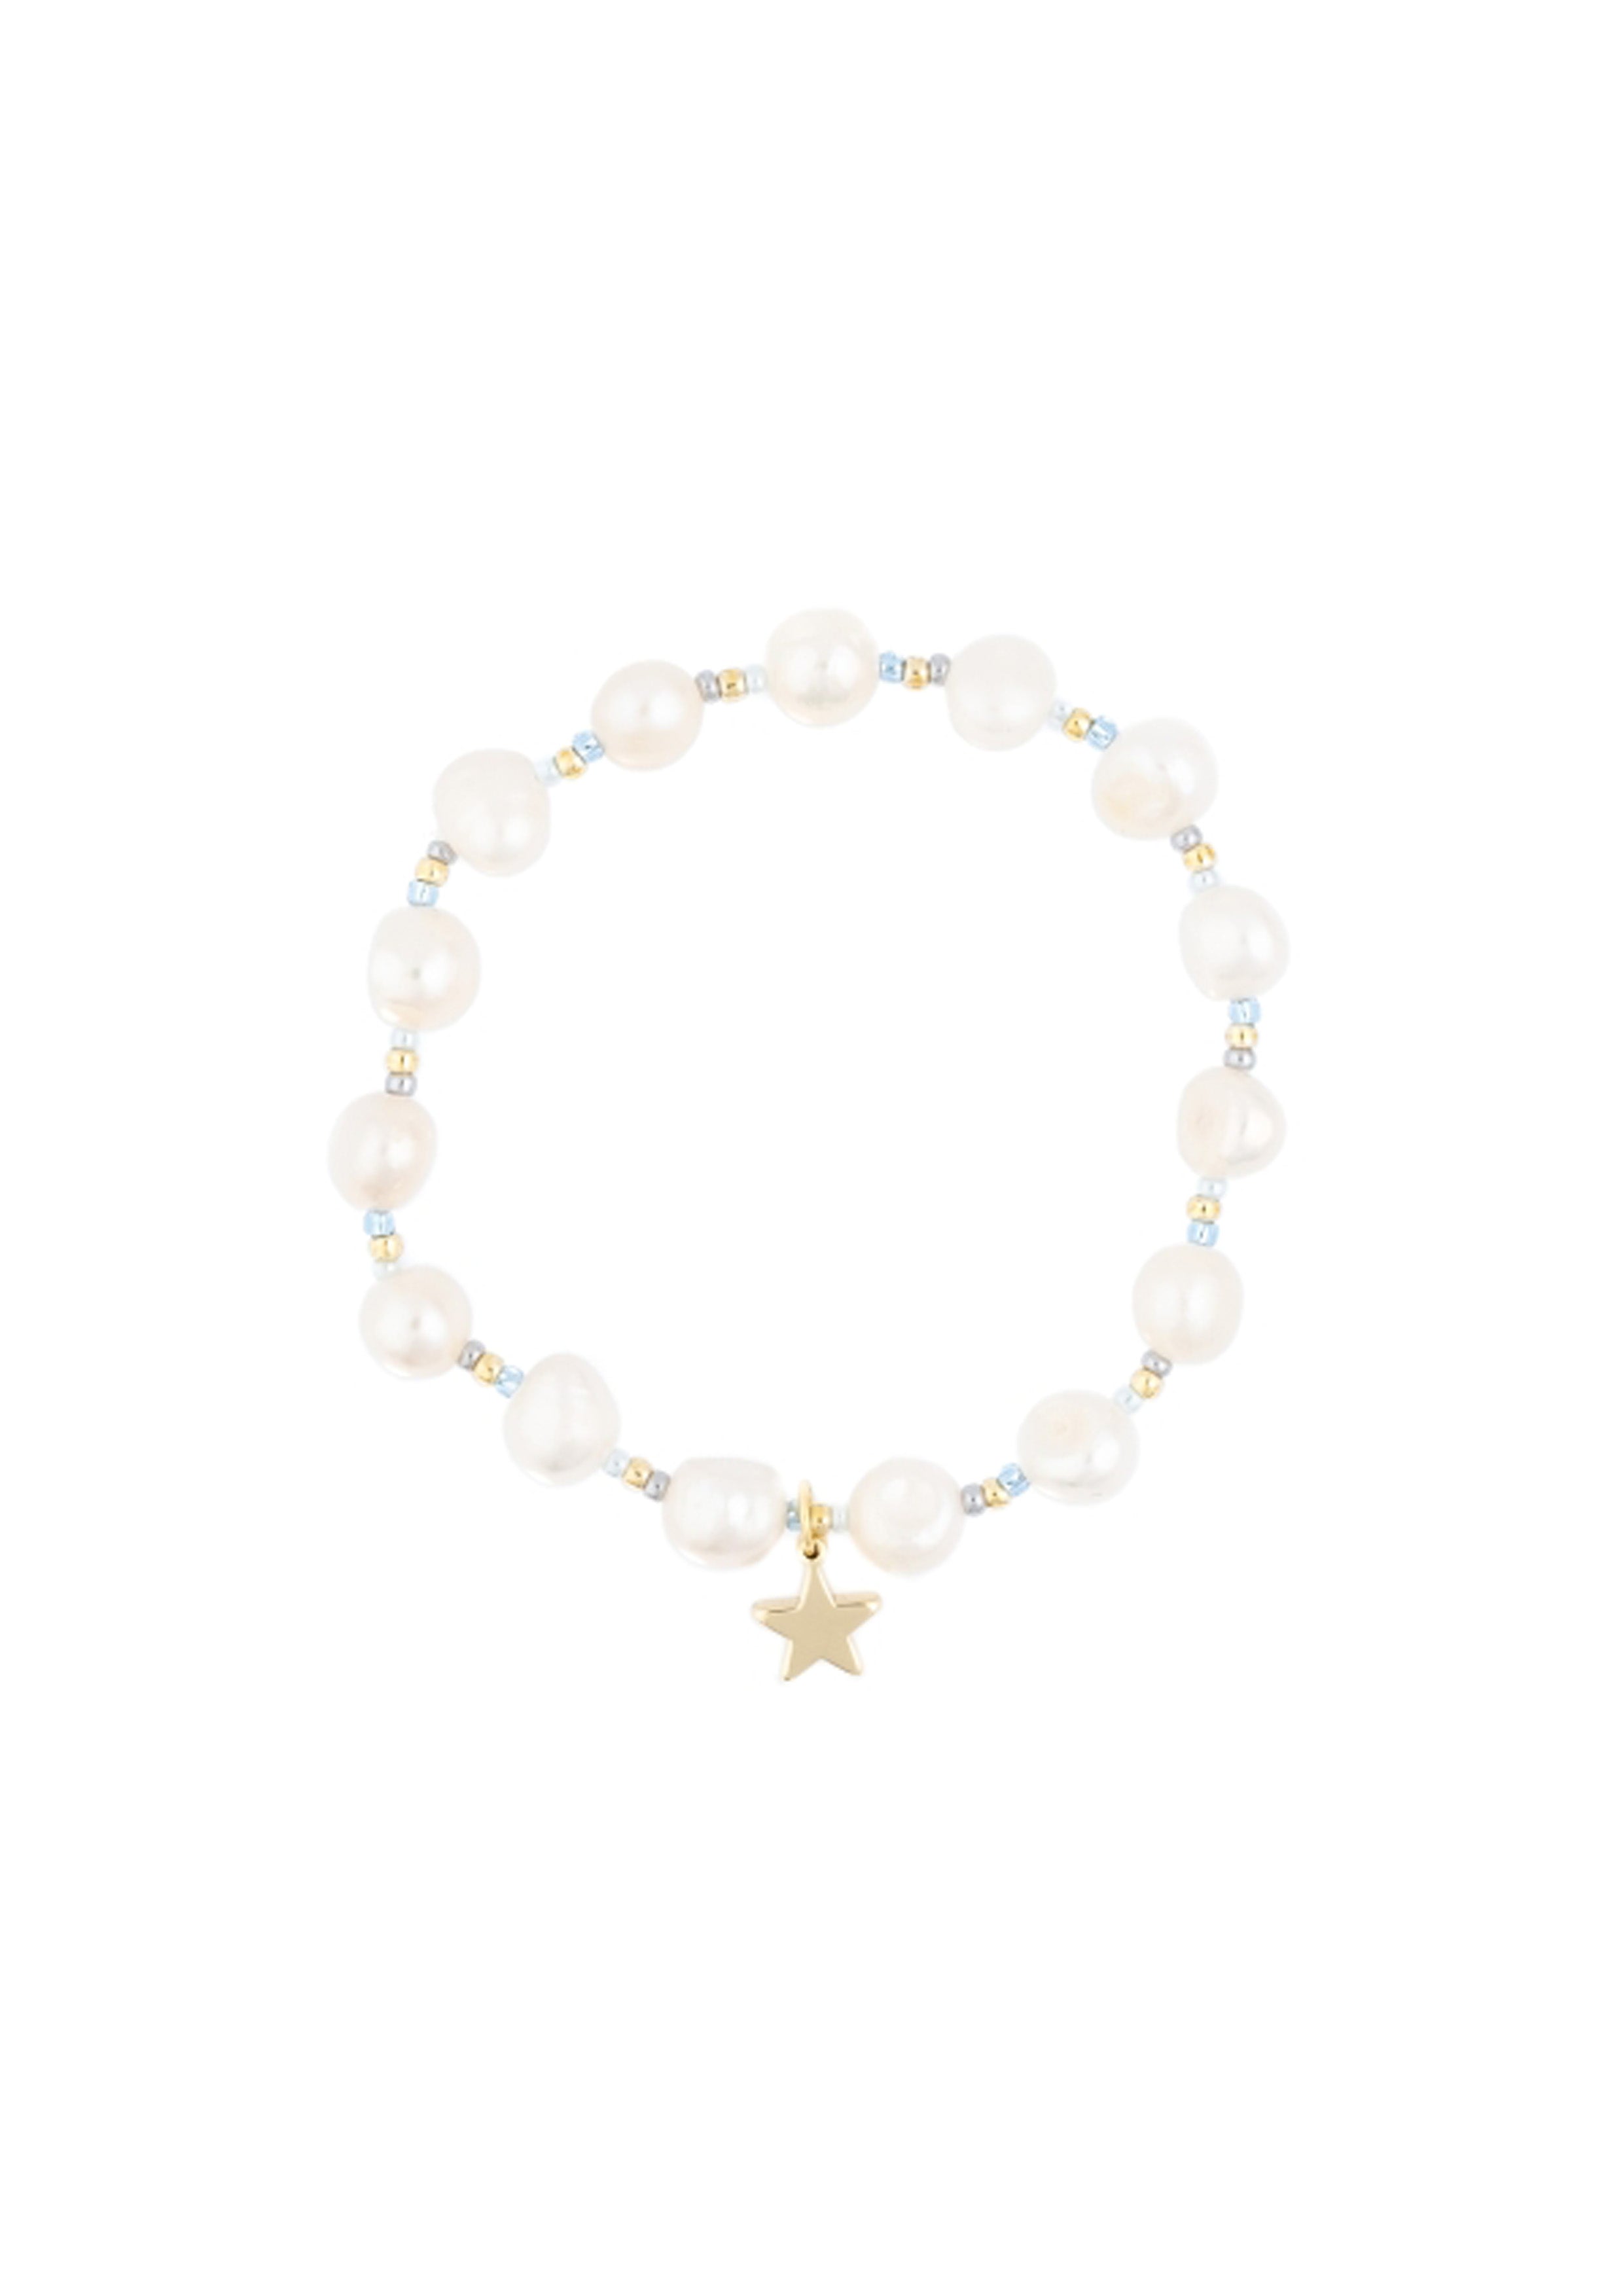 Pearlbead Bracelet w/Glass Beads Blue